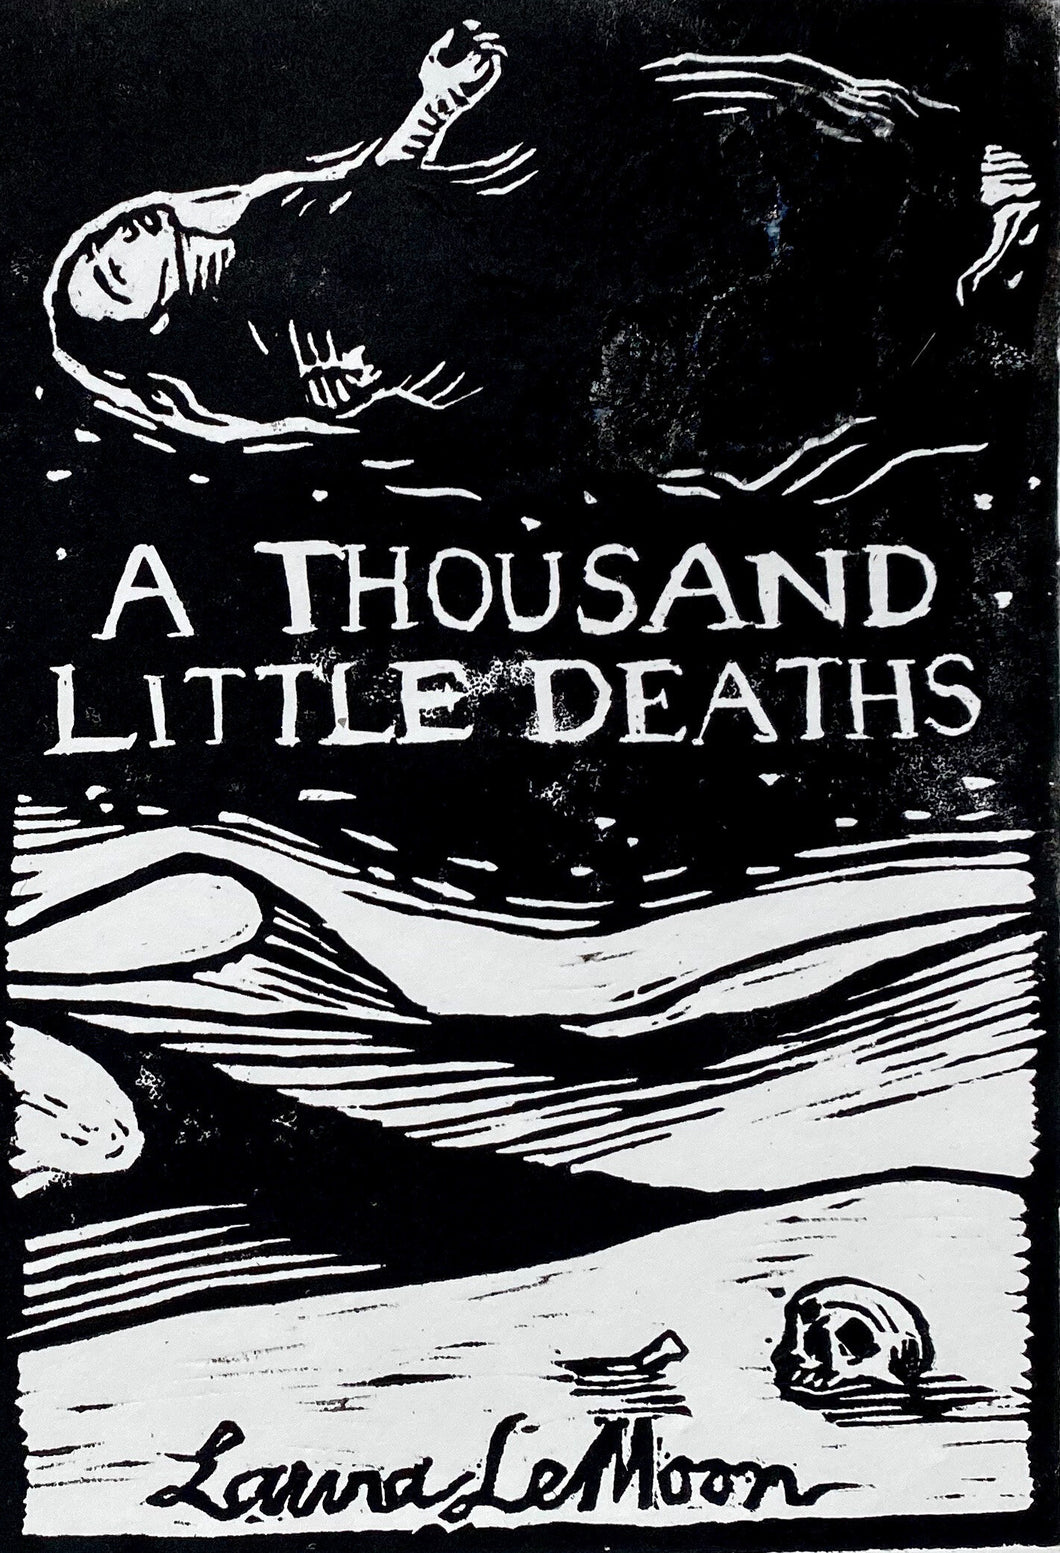 A Thousand Little Deaths by Laura Lemoon